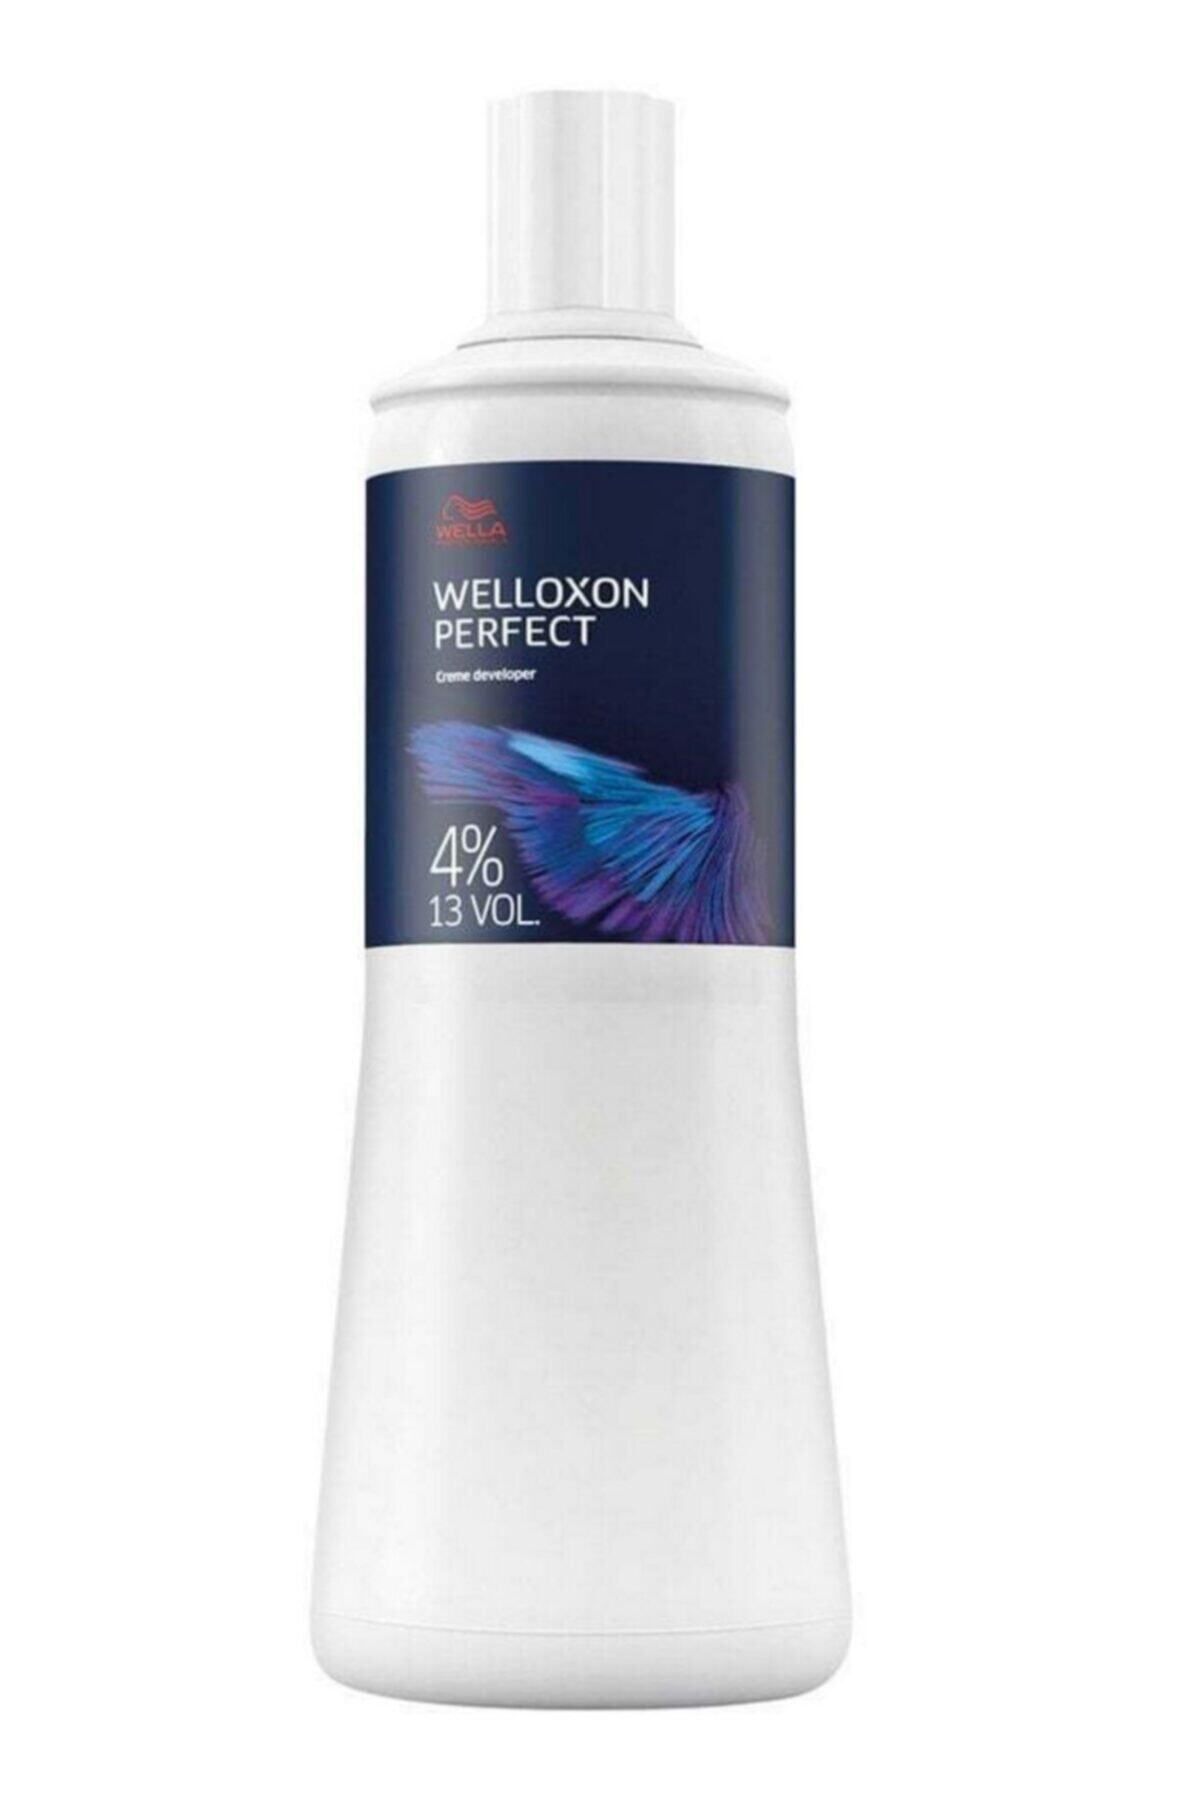 Wella Welloxon Perfect %4 13 Volum Oksidan 1000 ml